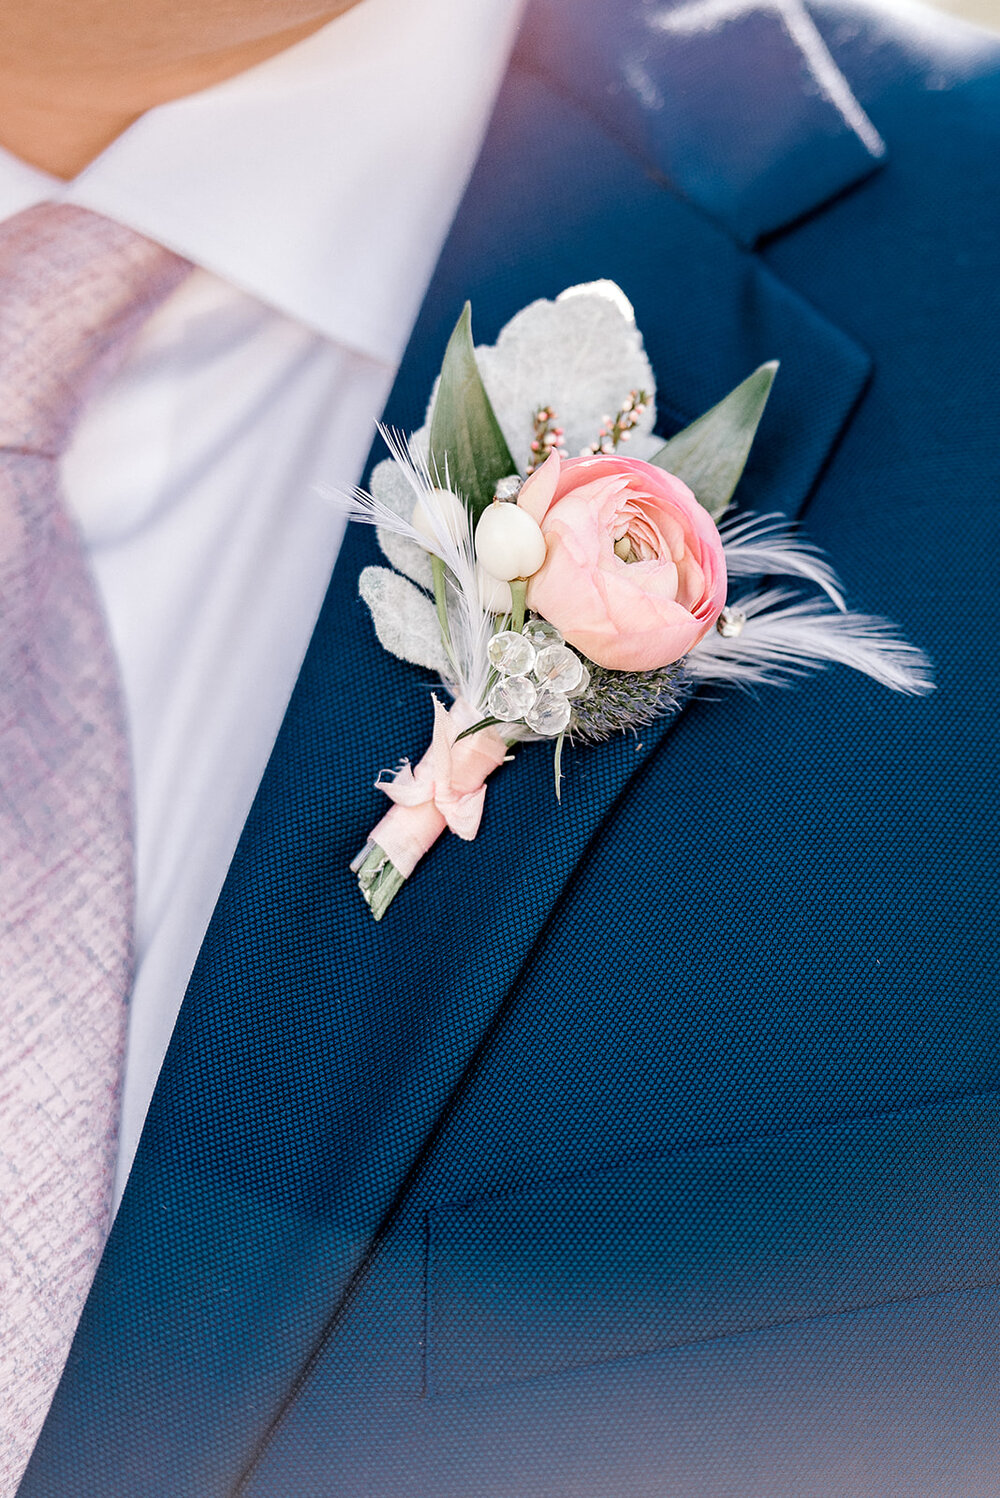 Violette-fleurs-roseville-napa-california-luxury-florist-silverado-resort-and-spa- weddings-by-scott-and-dana-groom-details-boutonniere-ranunculus-bling.jpg